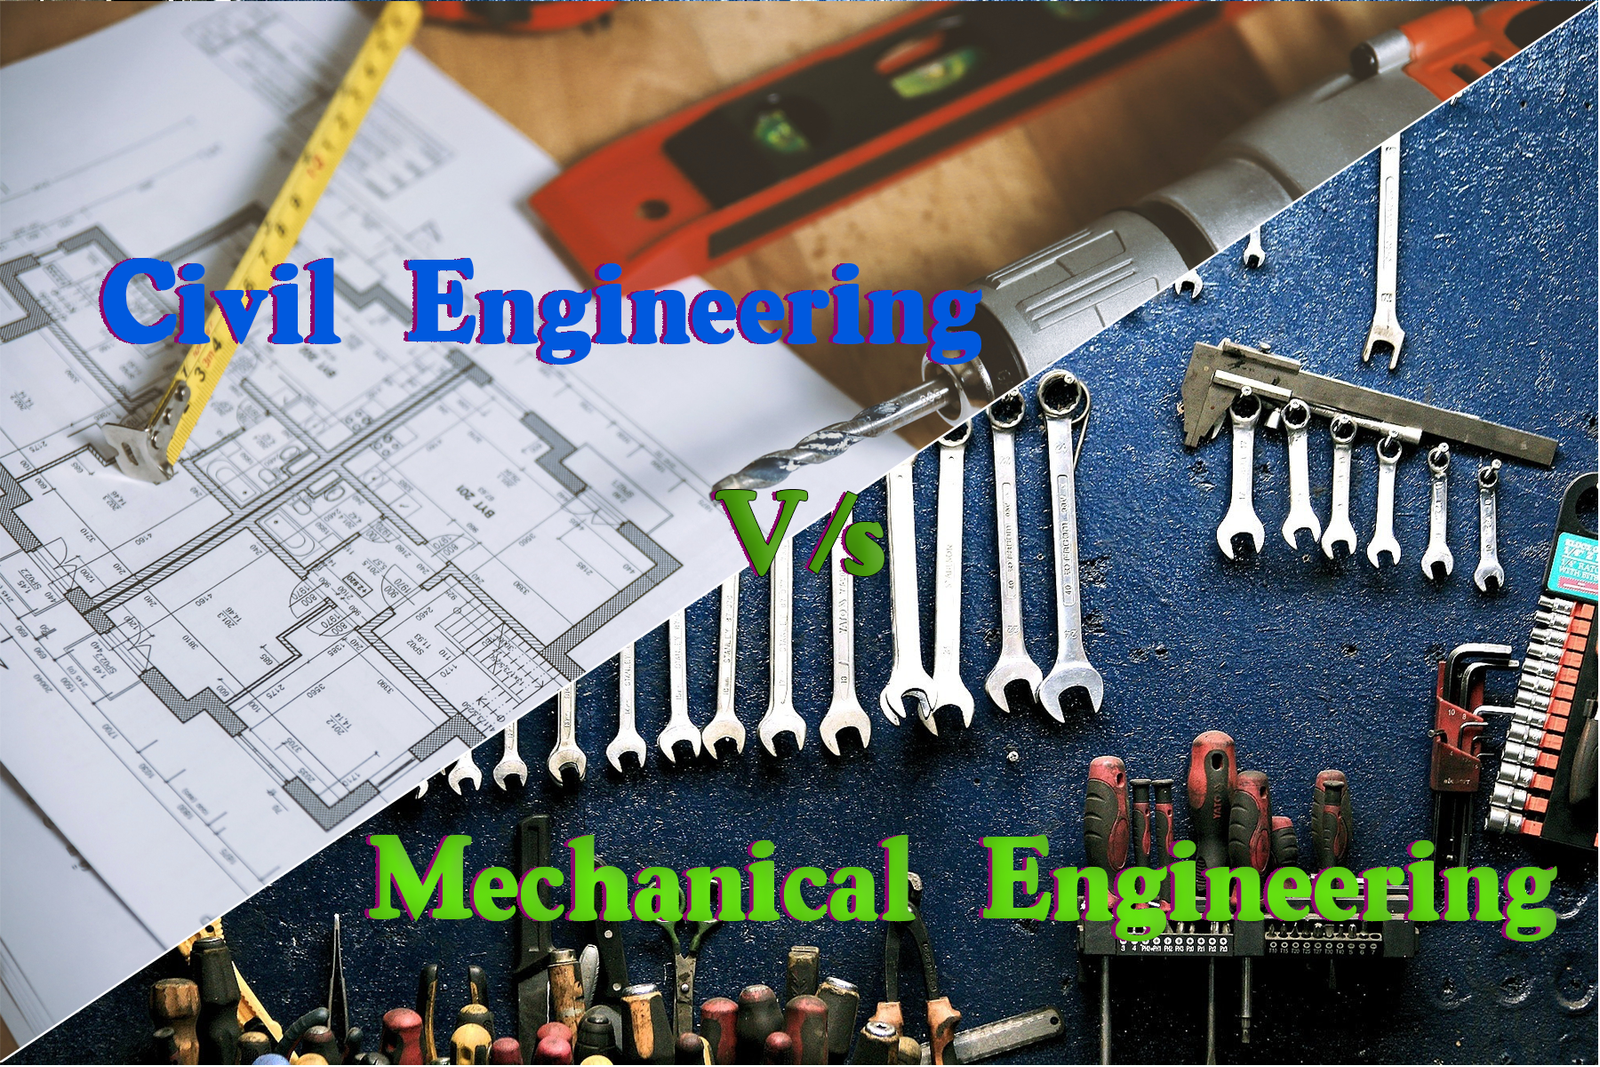 Civil Engineering V/s Mechanical Engineering